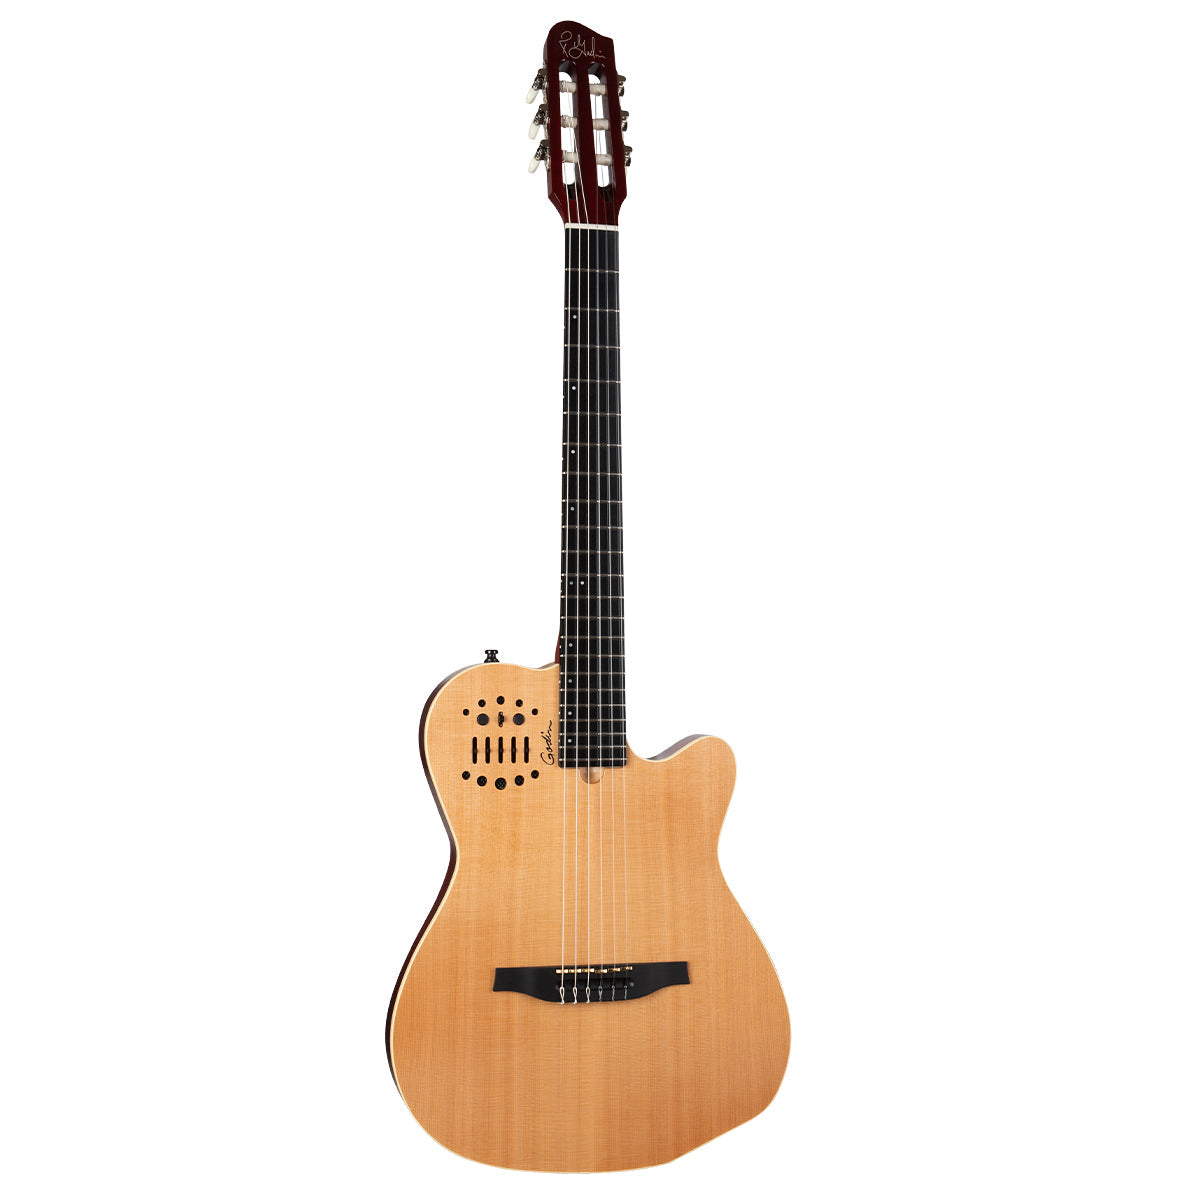 Godin ACS Nylon 2 Voice Guitar ~ Cedar Natural, Electric Guitar for sale at Richards Guitars.